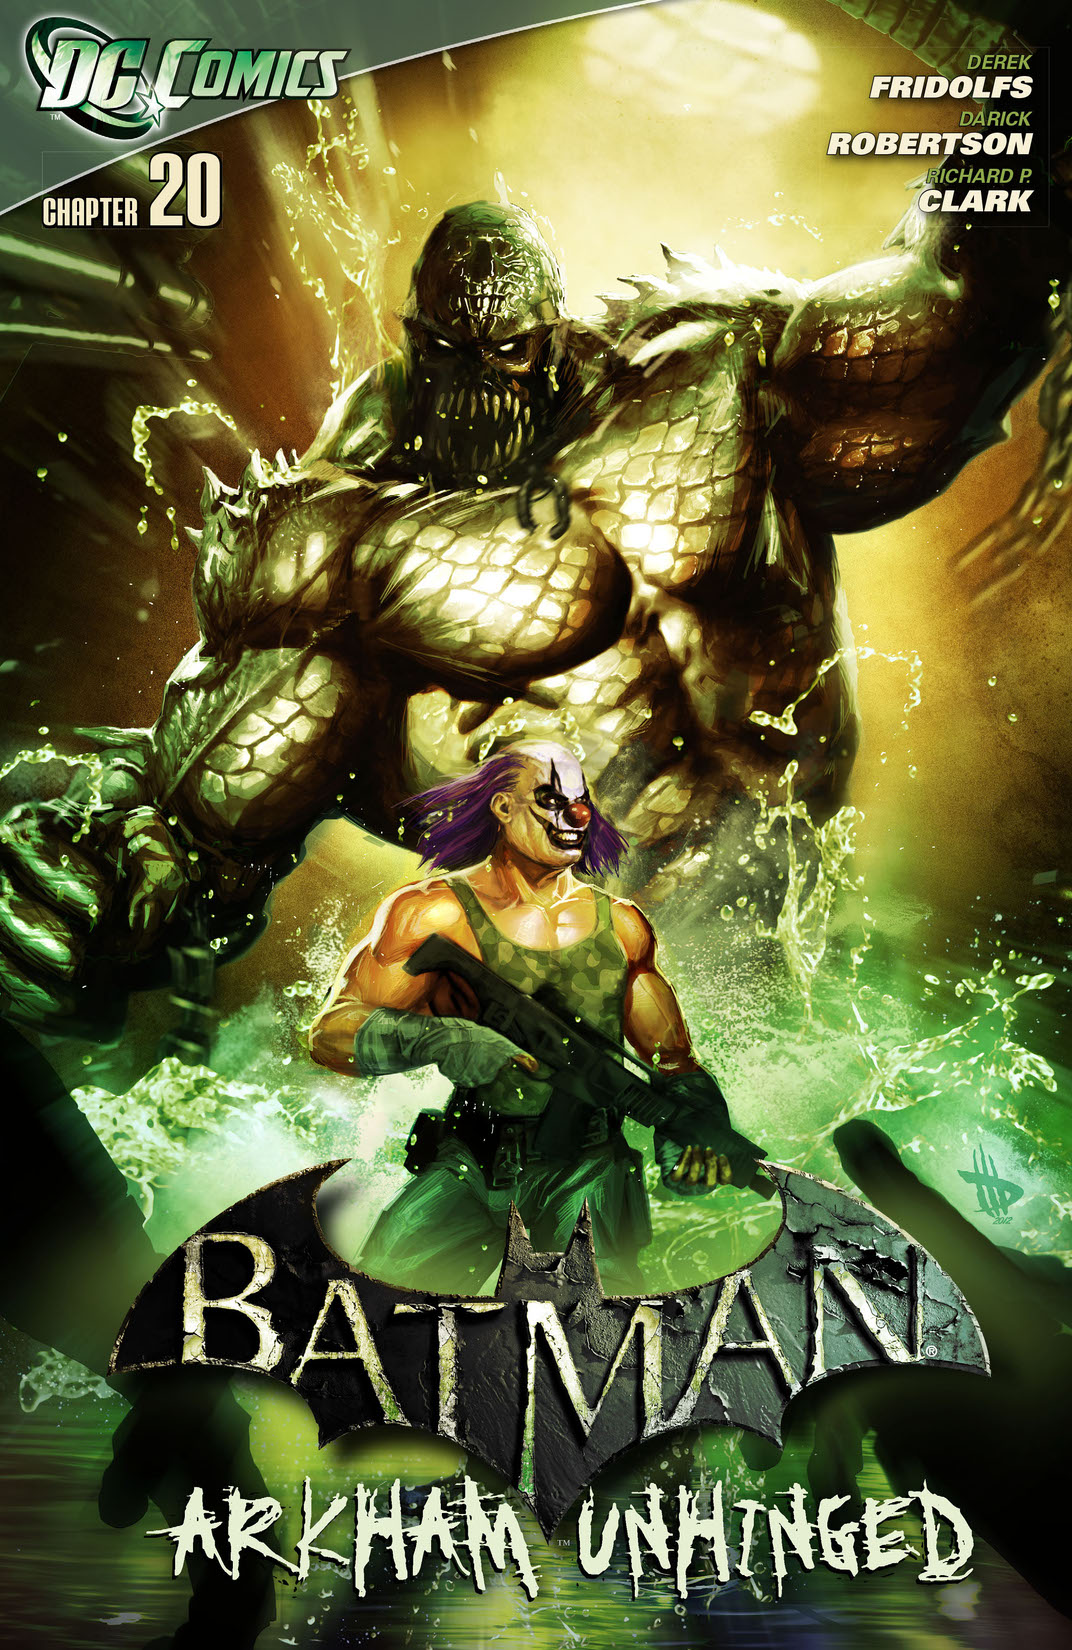 Batman: Arkham Unhinged #20 preview images